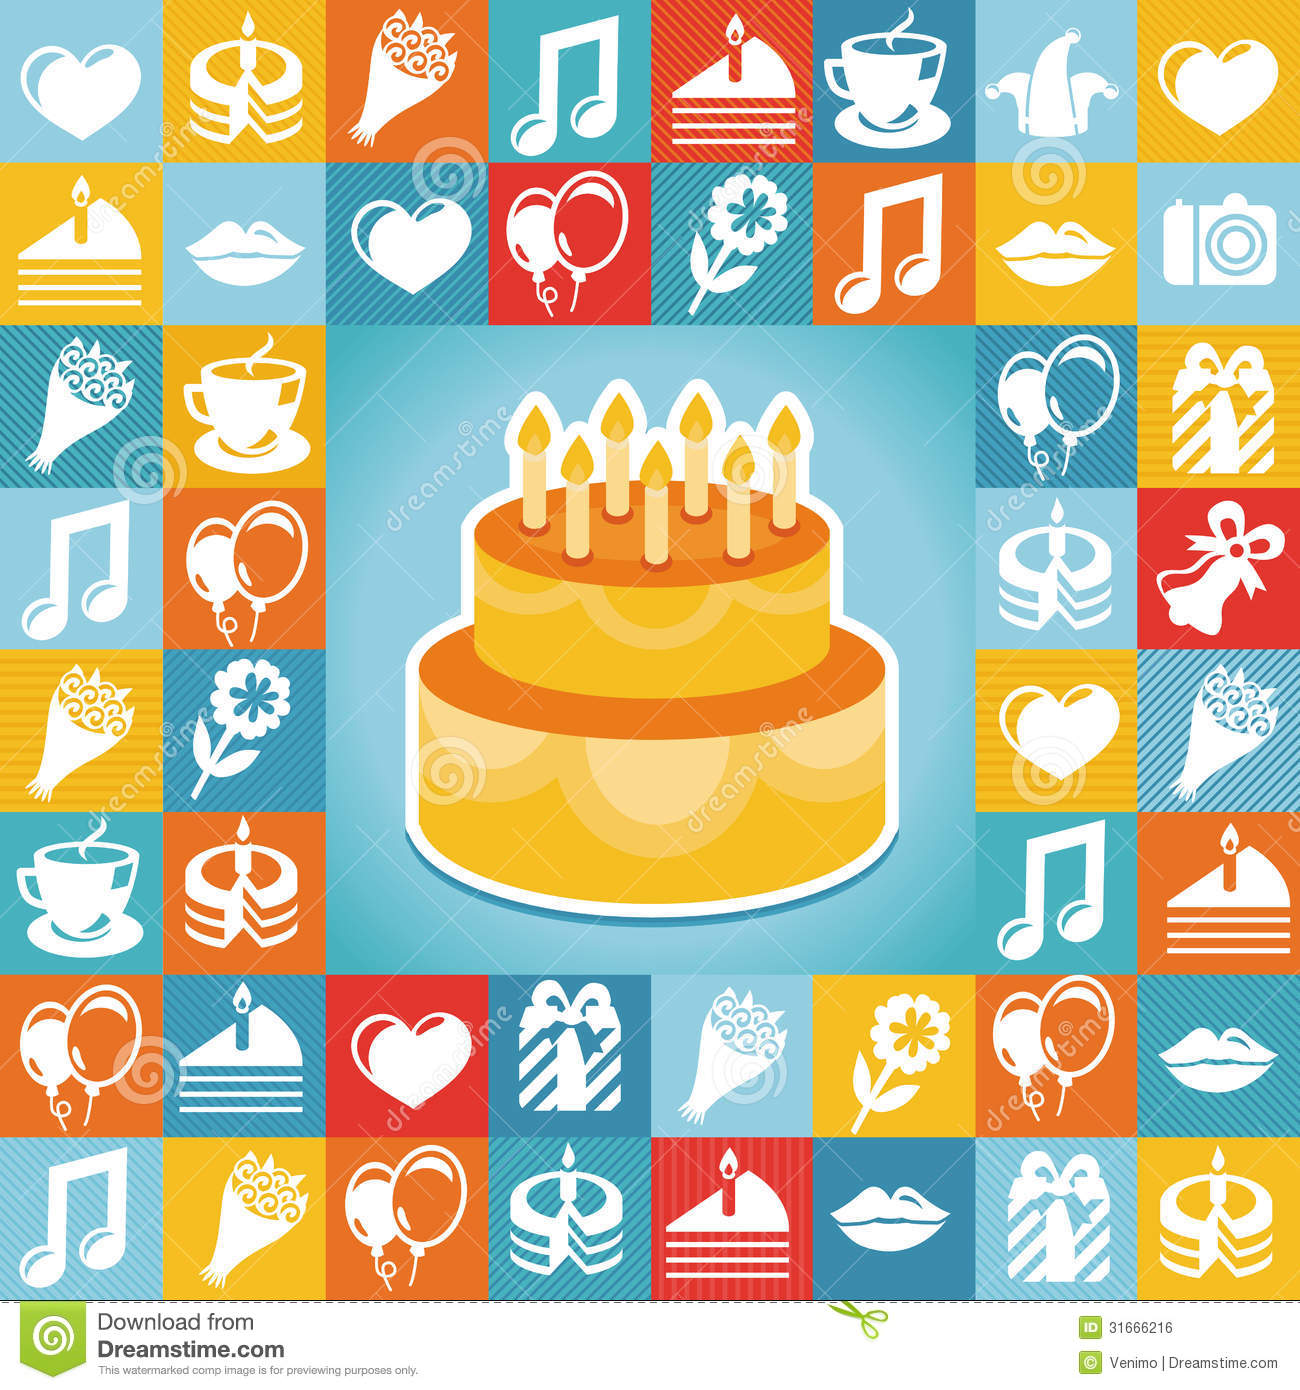 Birthday Party Icons